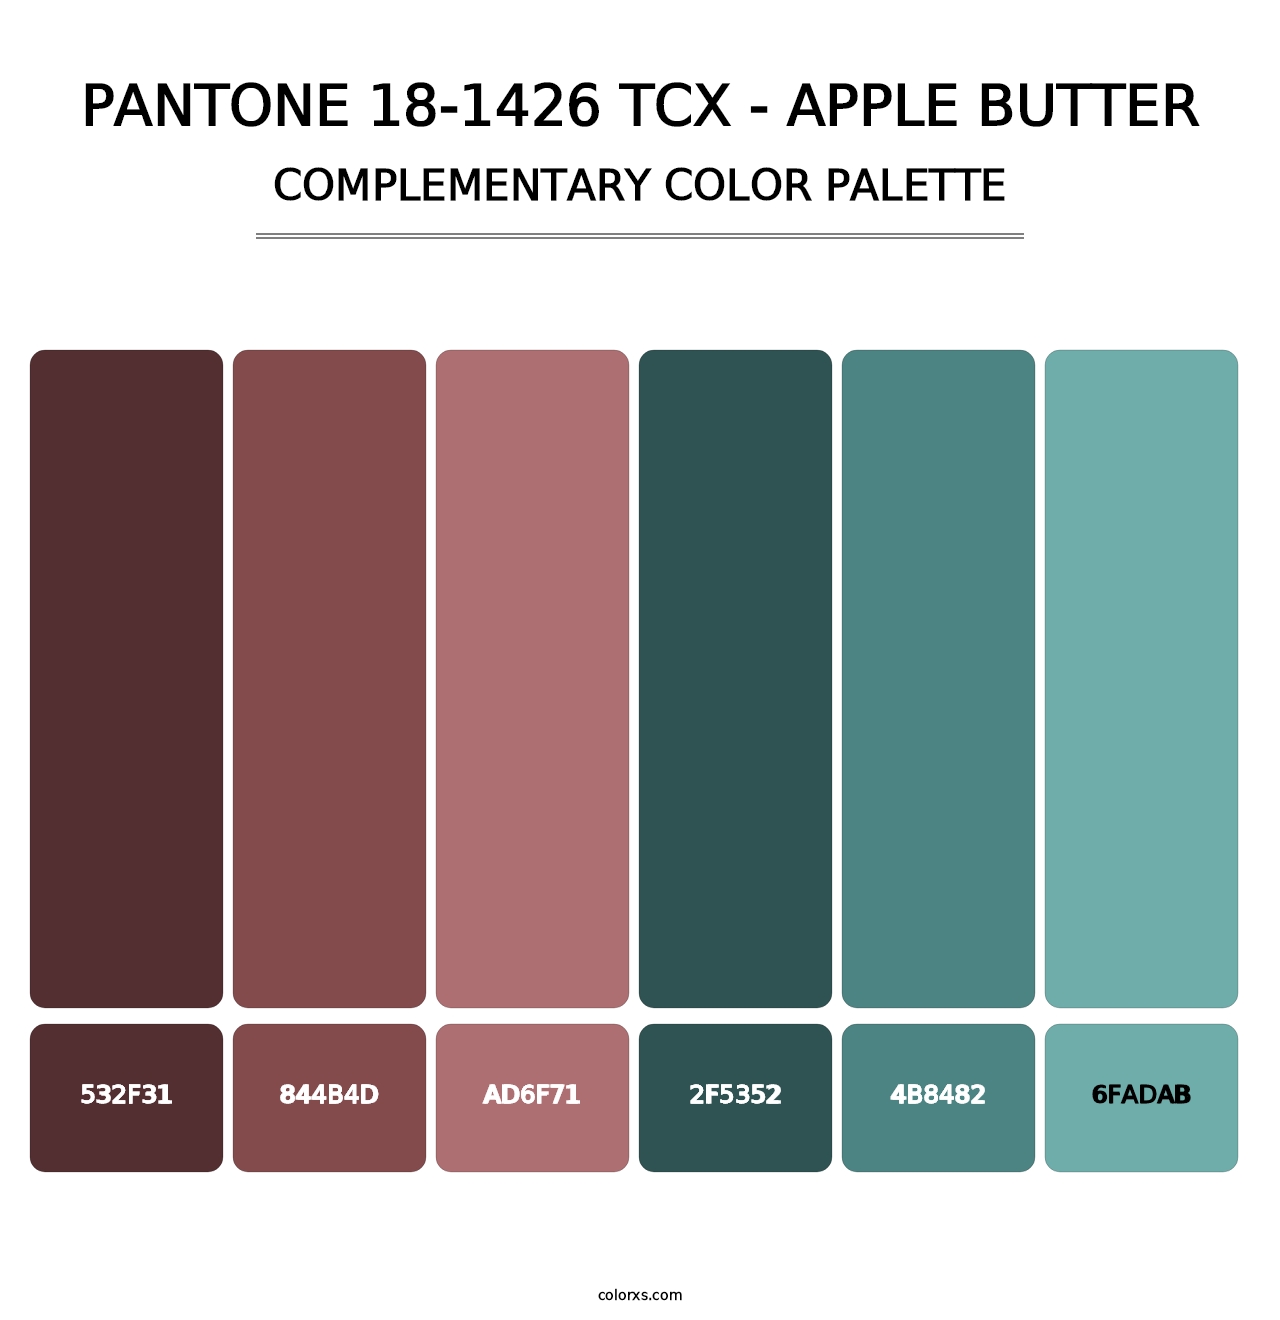 PANTONE 18-1426 TCX - Apple Butter - Complementary Color Palette